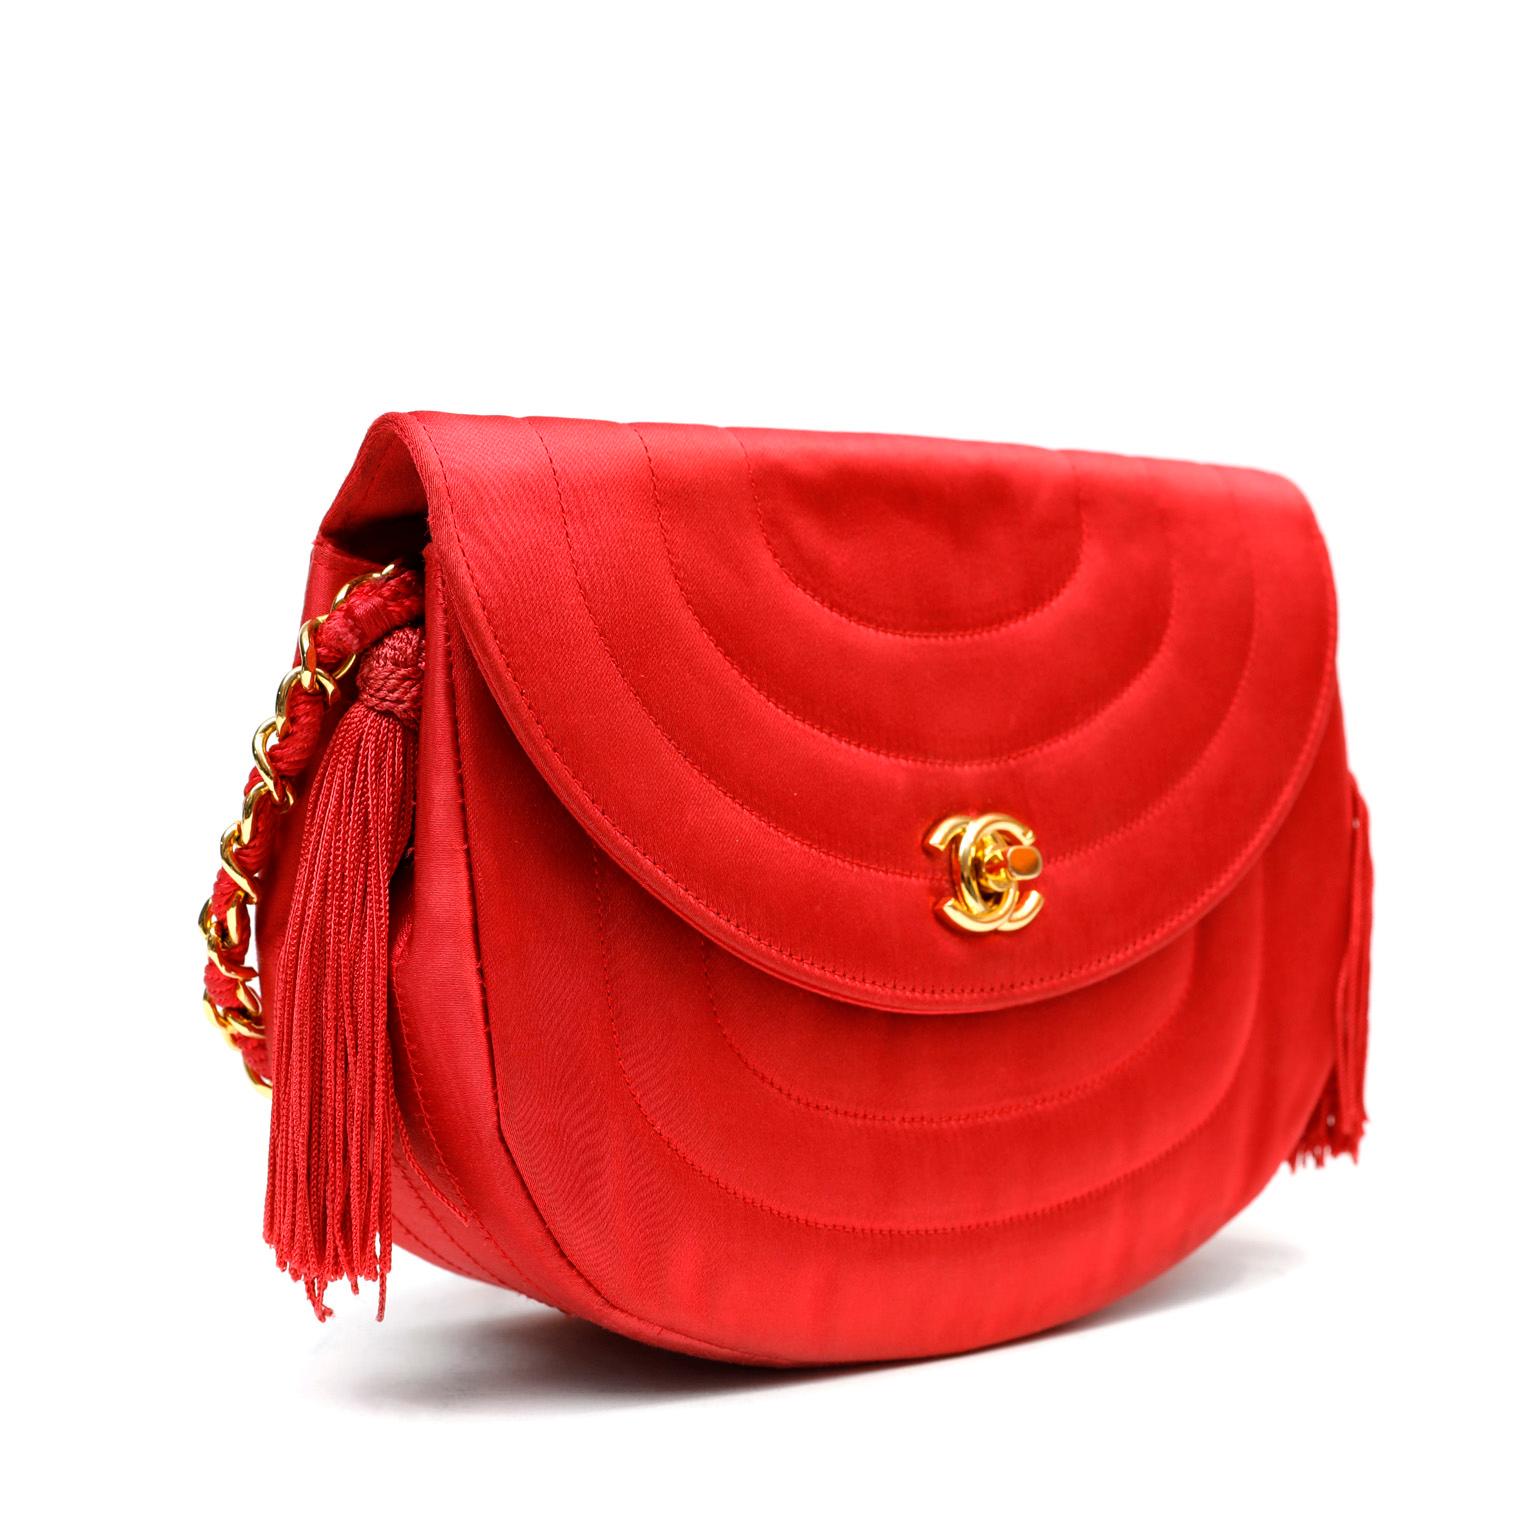 Chanel Vintage Abendtasche aus rotem Satin (Rot) im Angebot